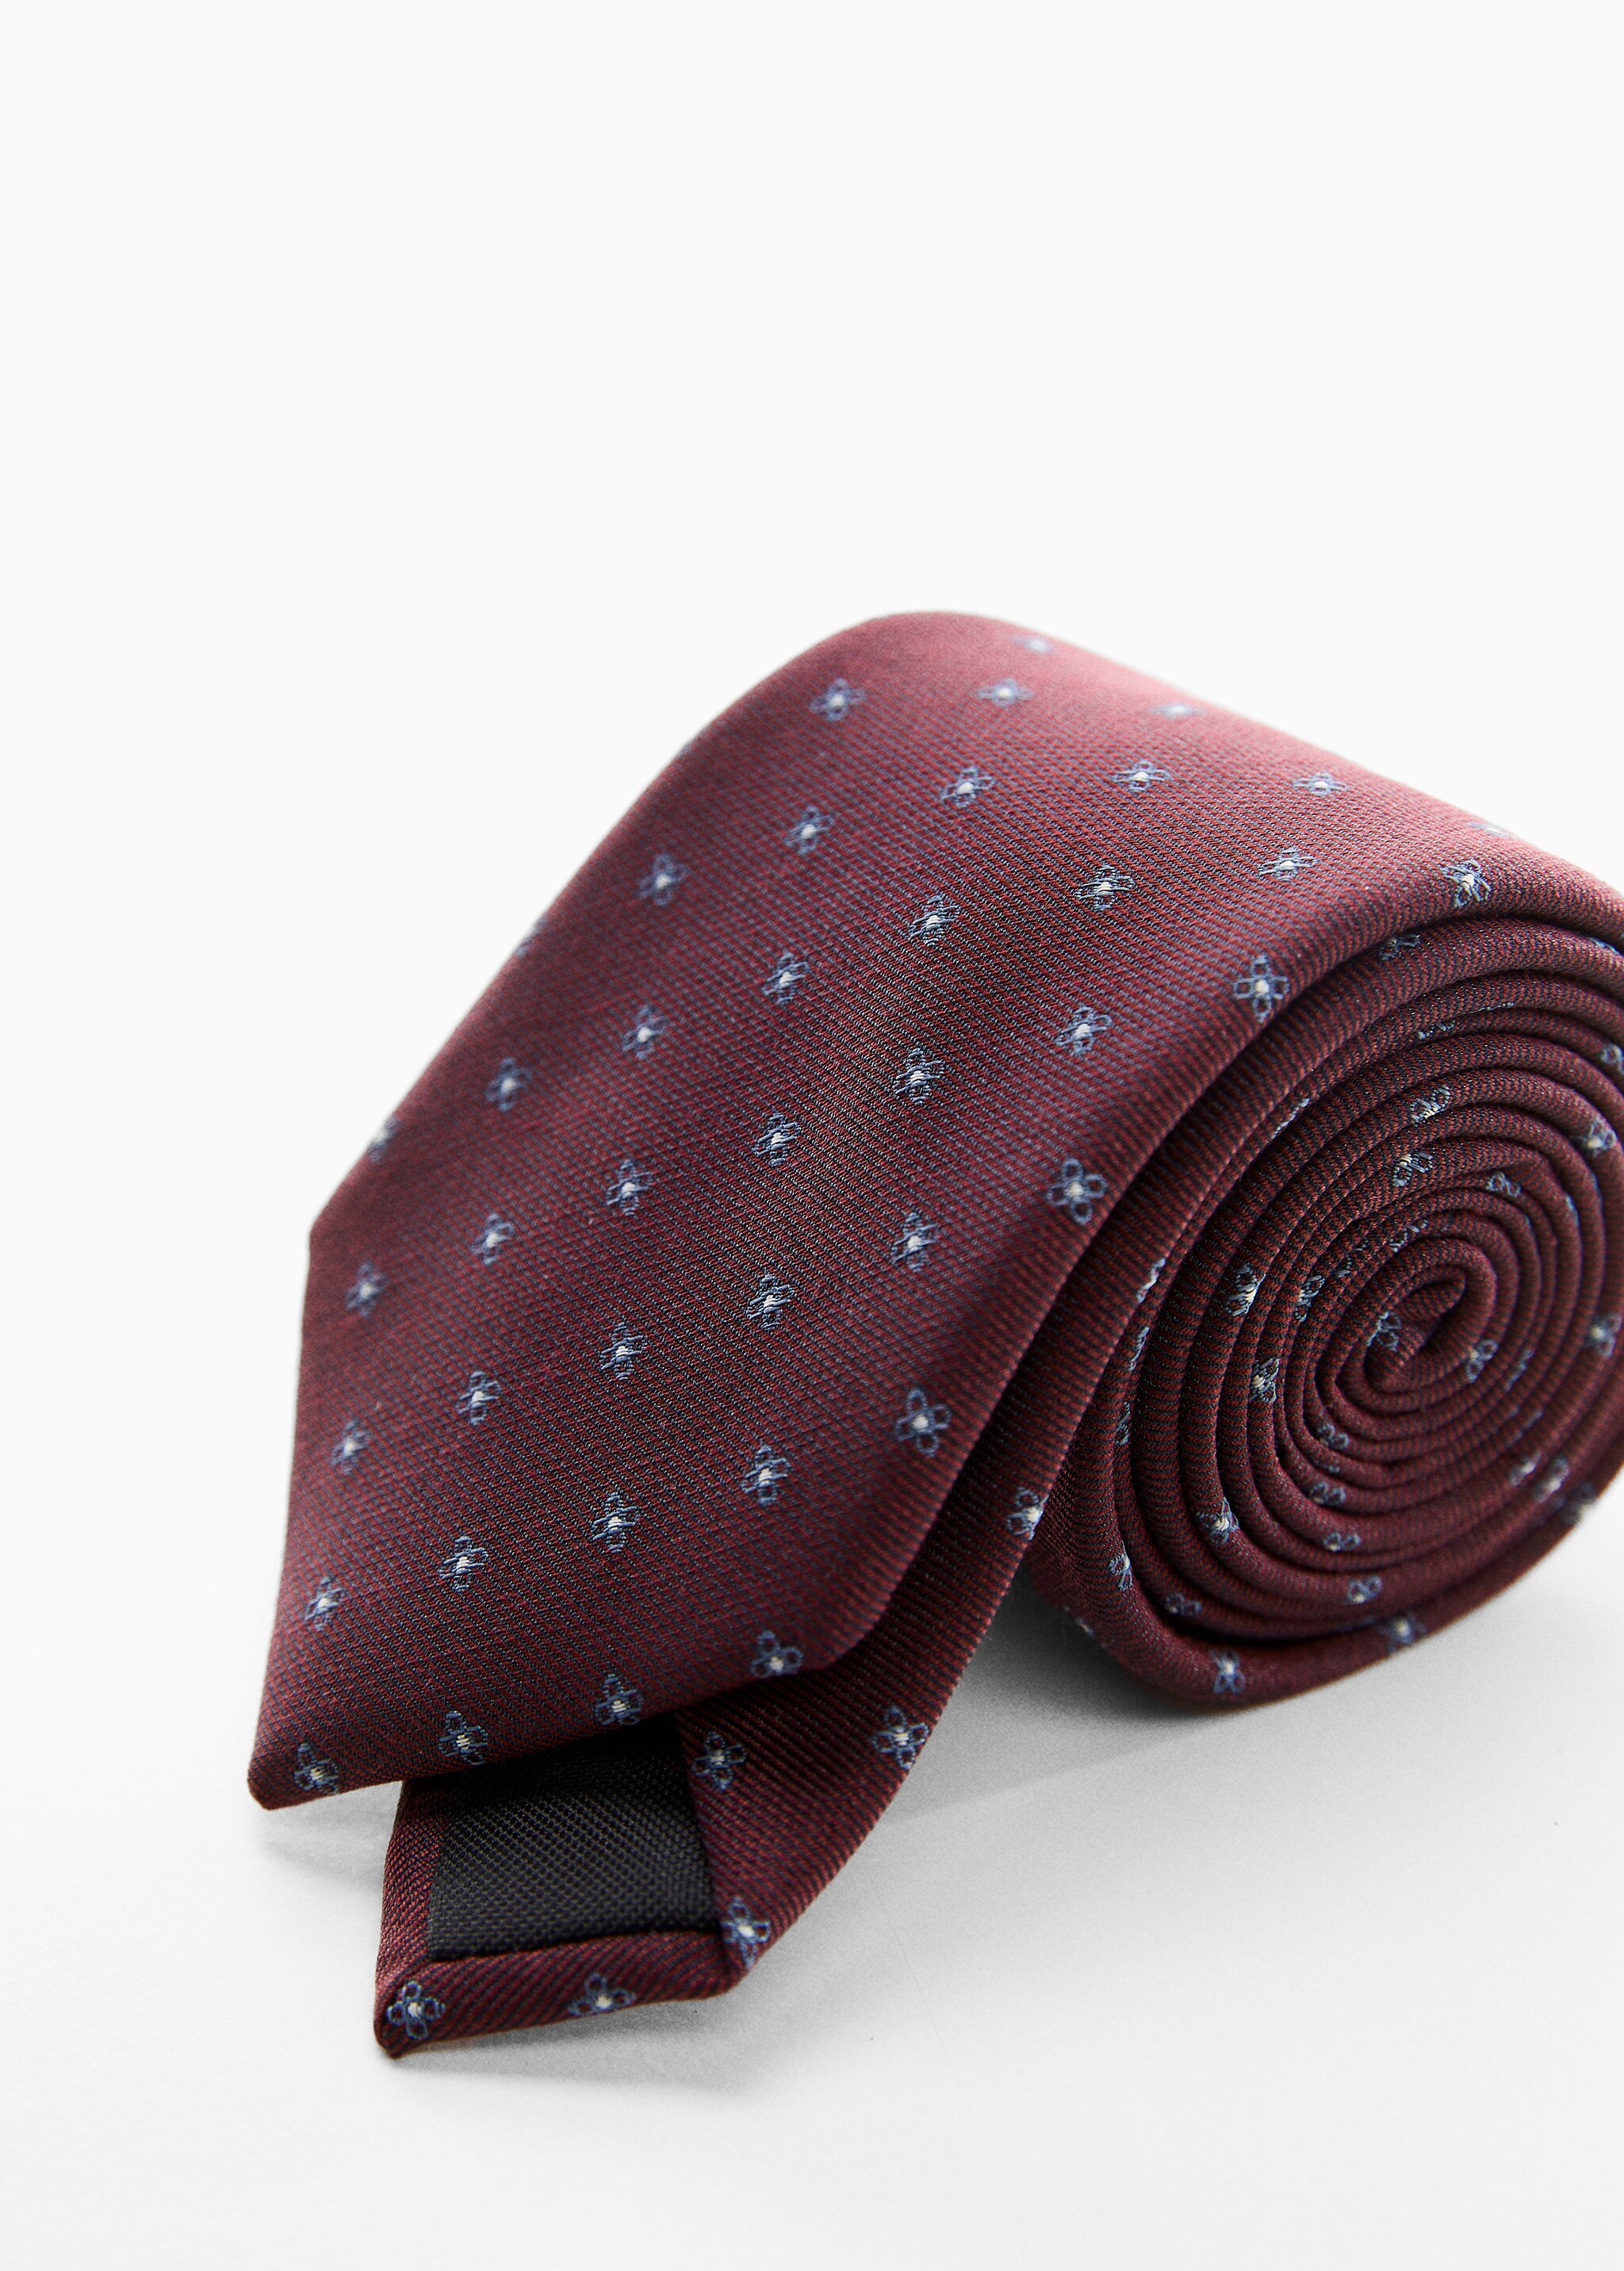 Crease-resistant patterned tie - Medium plane